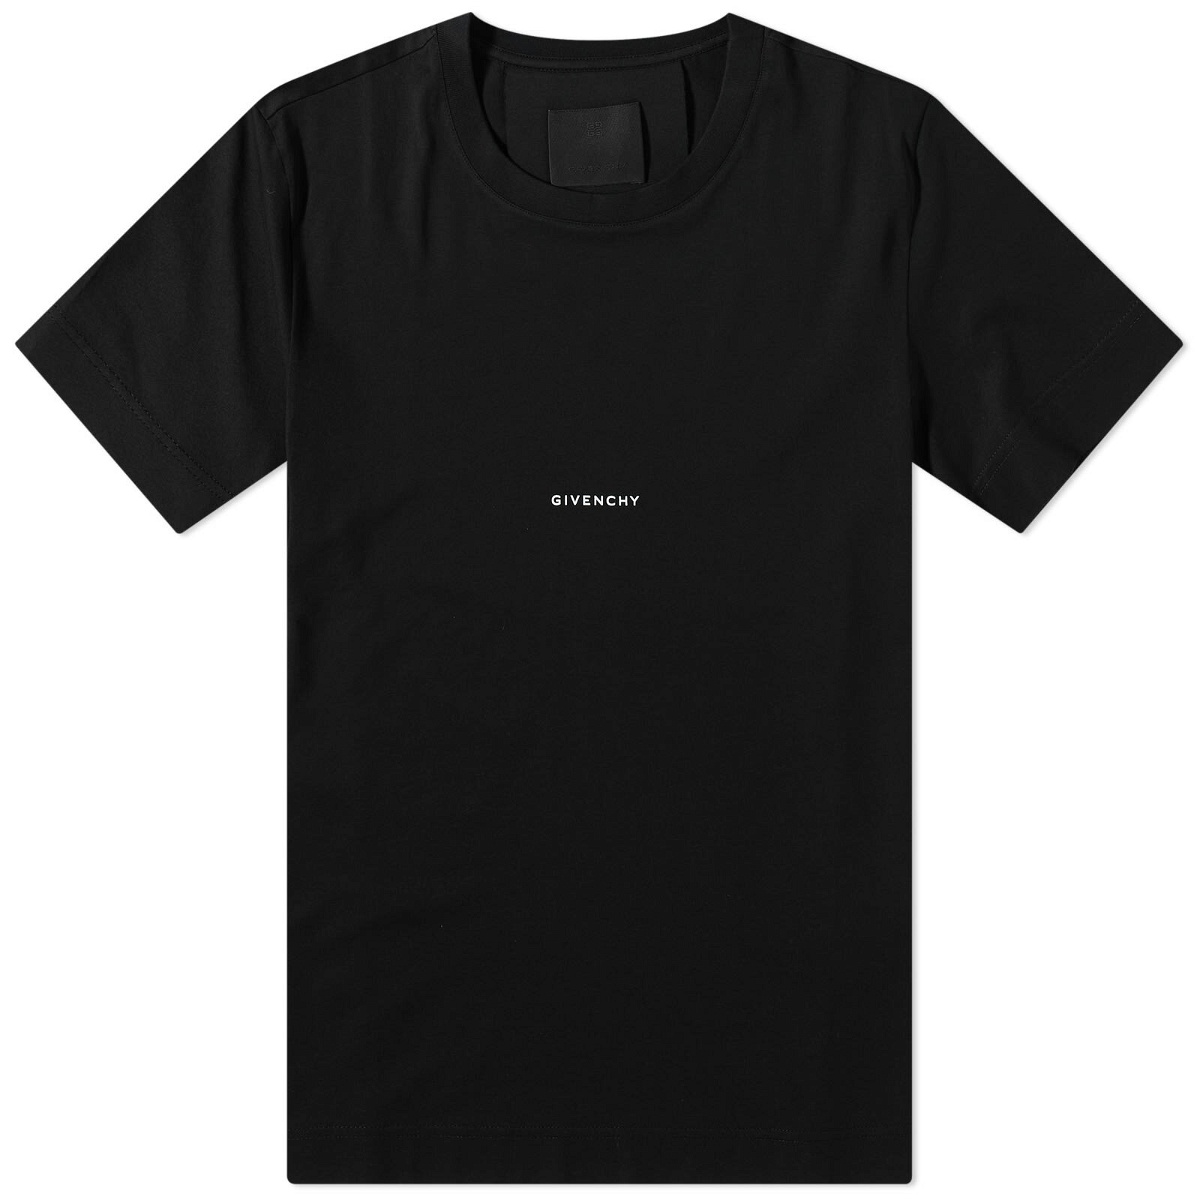 Givenchy Men's Small Text Logo T-Shirt in Black Givenchy